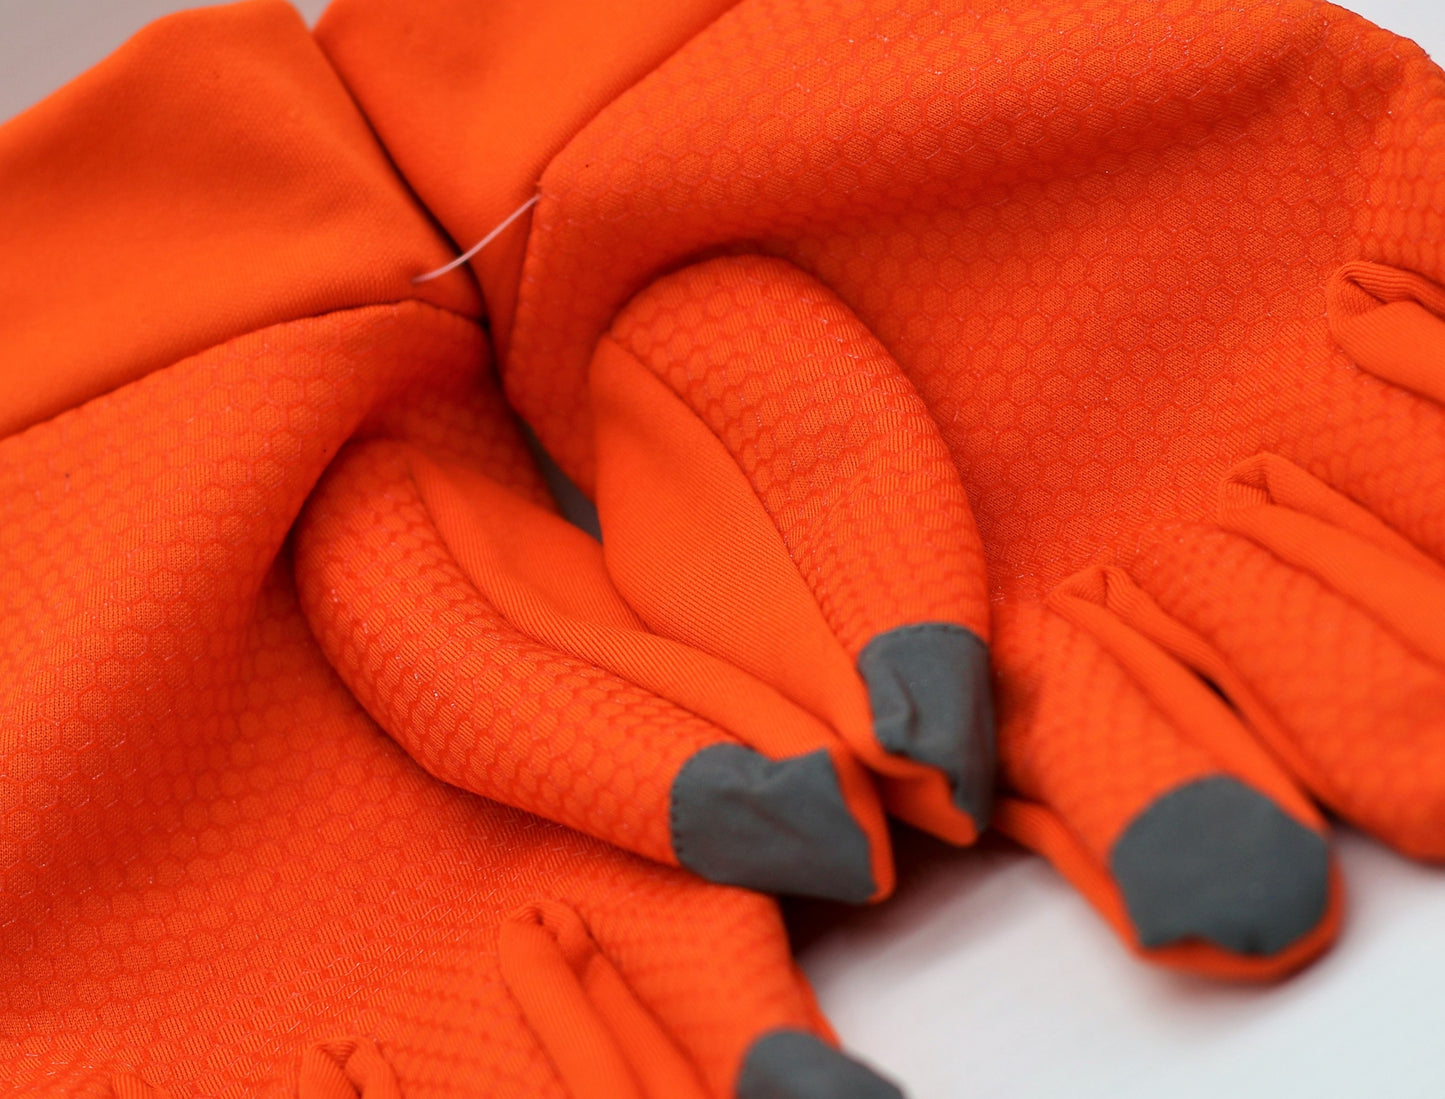 Orange Utility Gloves